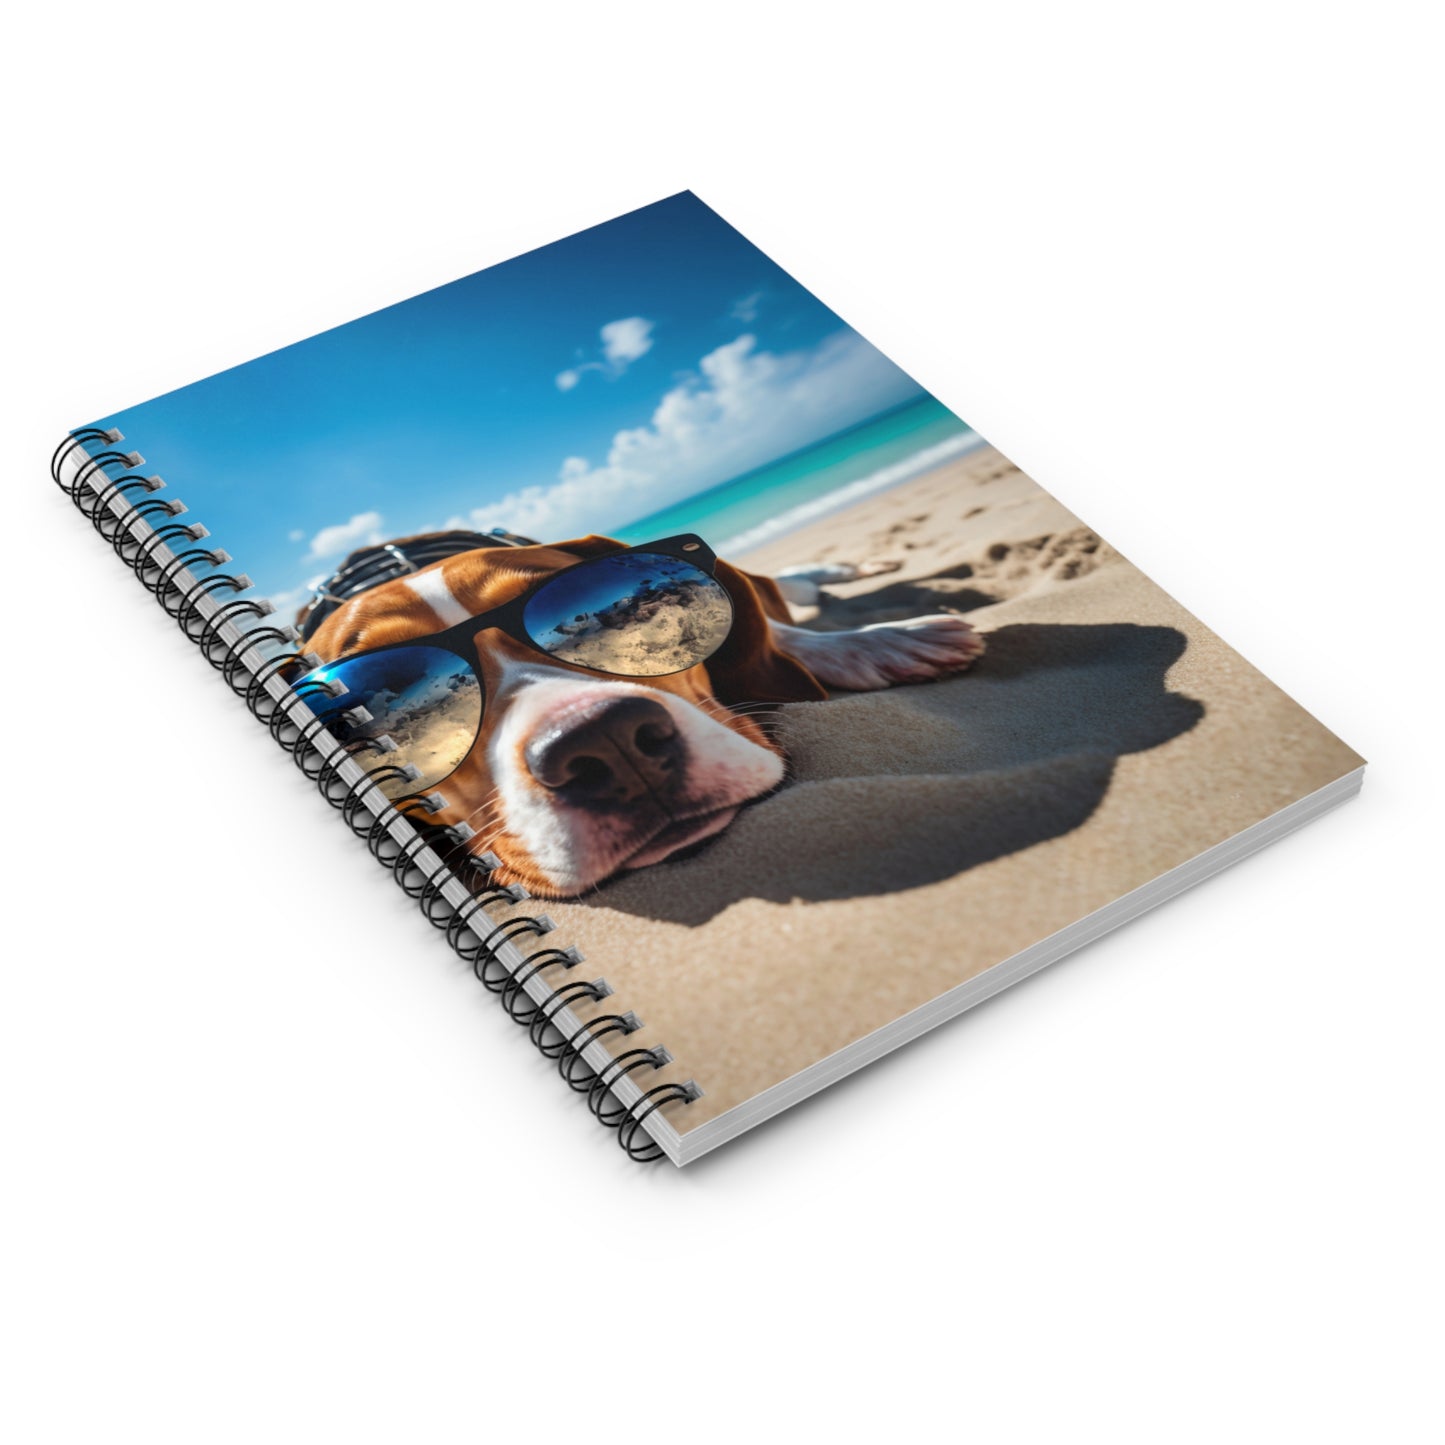 Relaxing Dog Sunbathing Spiral Notebook